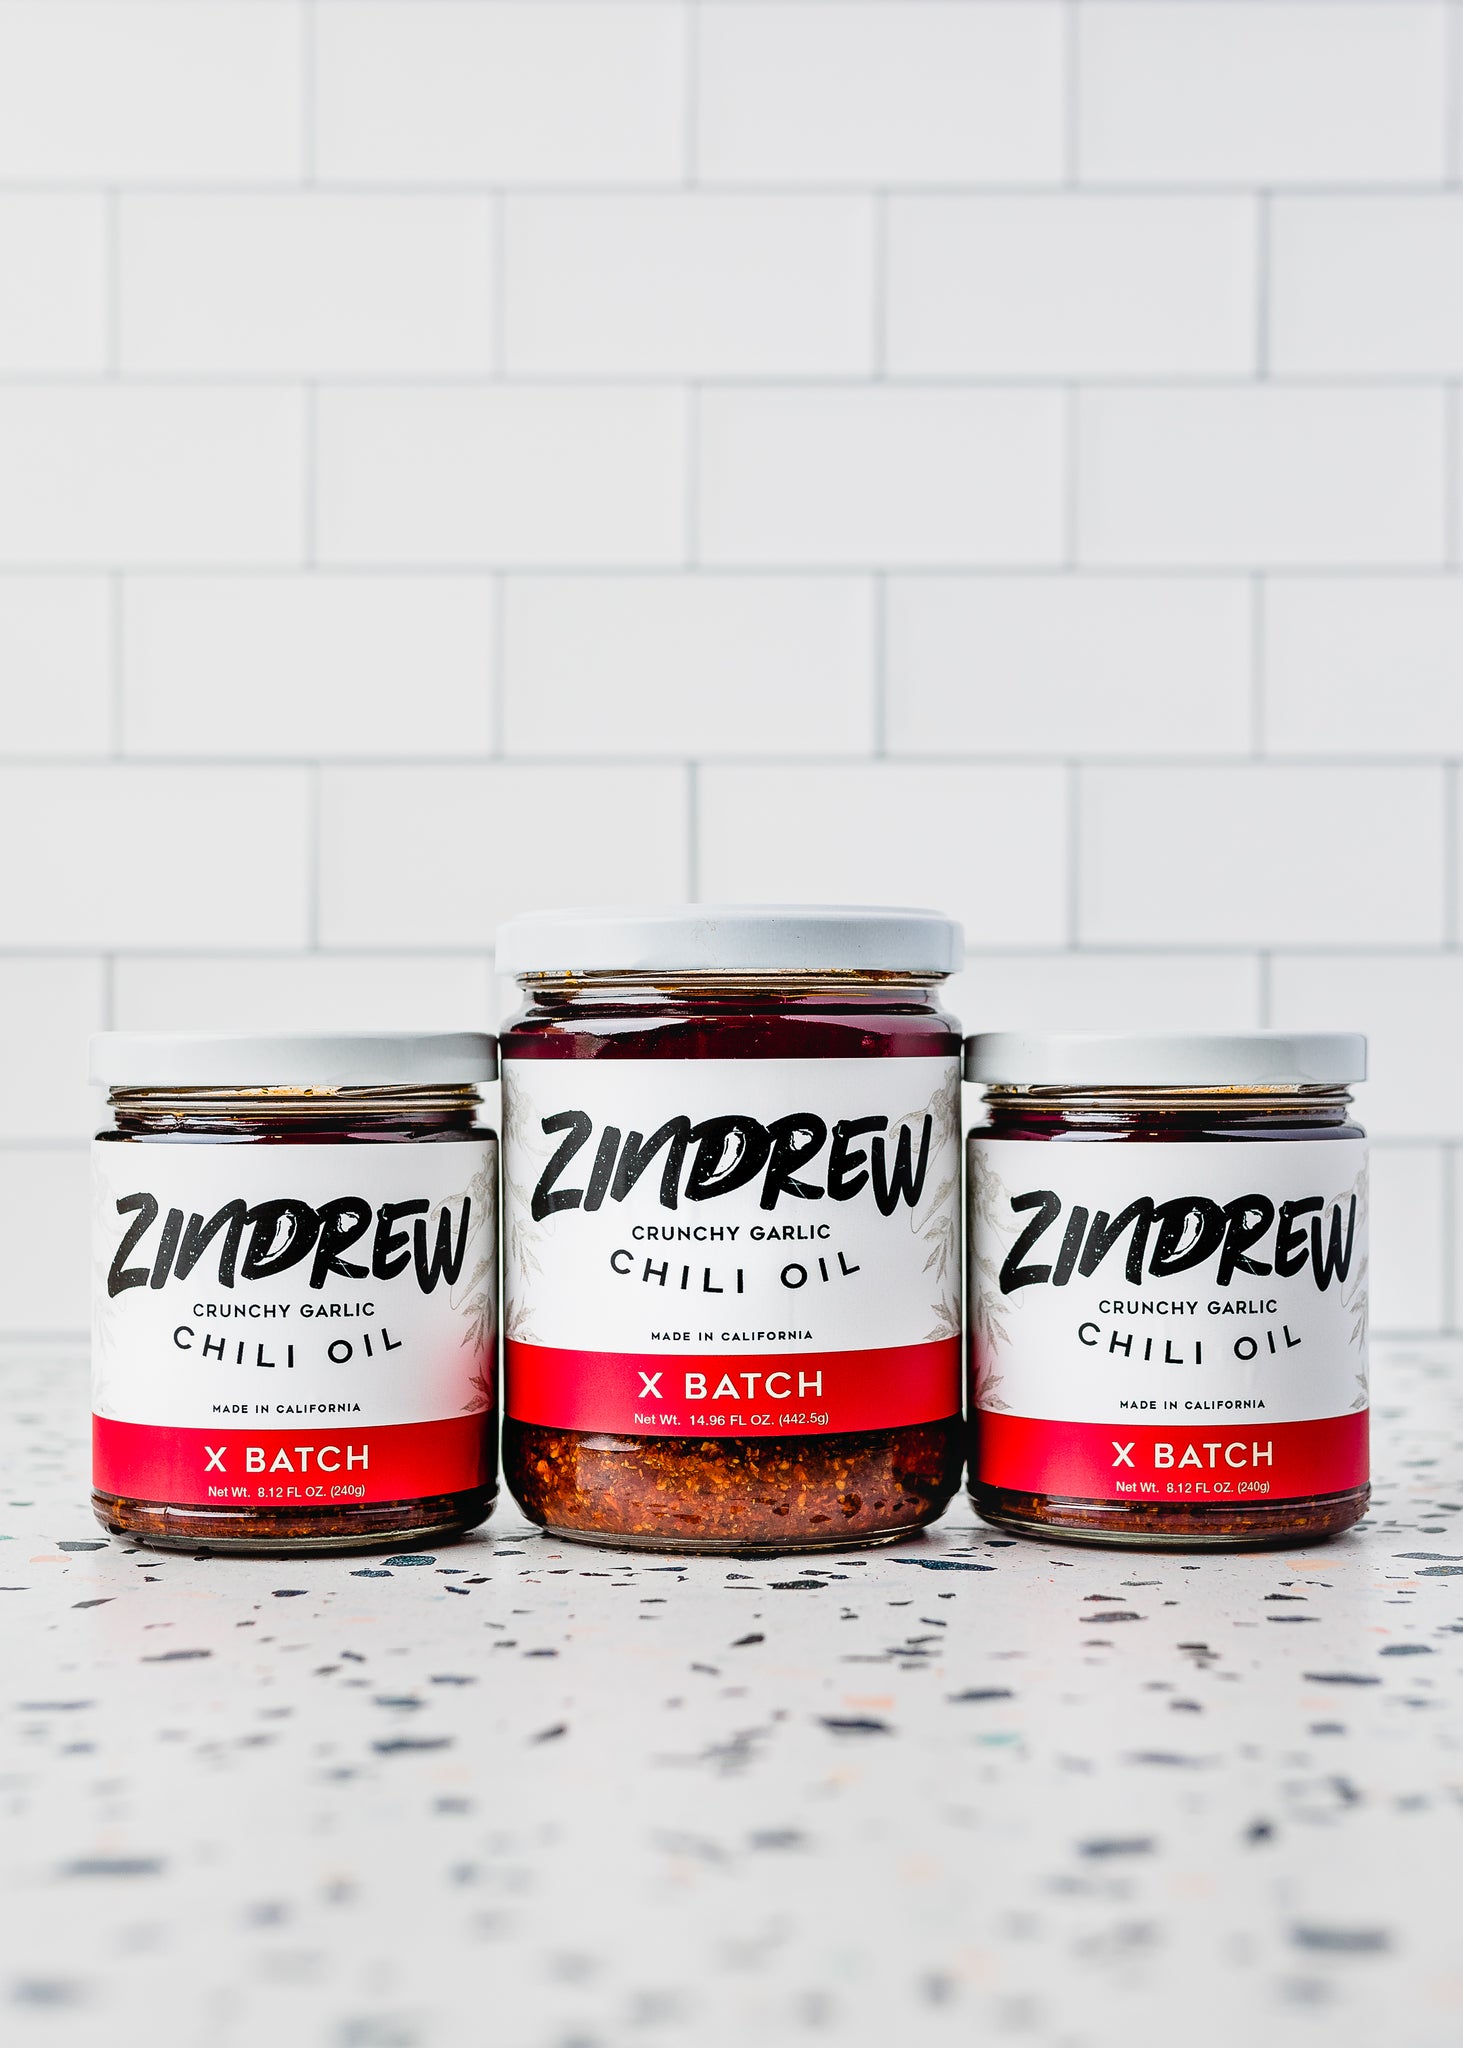 Zindrew Crunchy Garlic Chili Oil -       X Batch